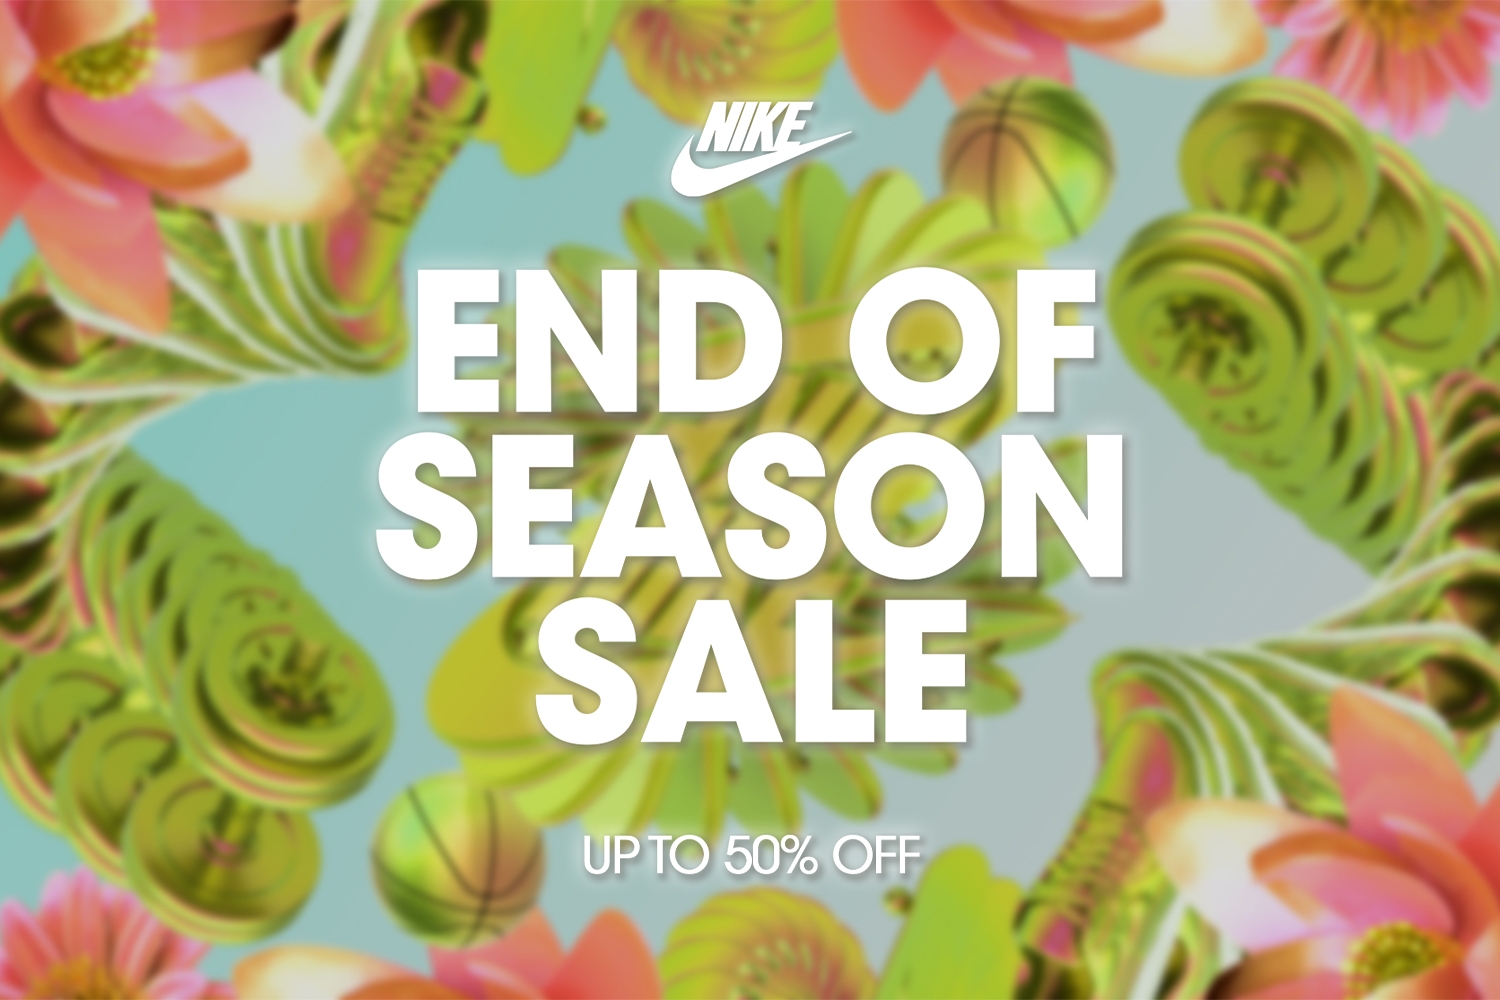 De Nike End Of Season sale is nu live